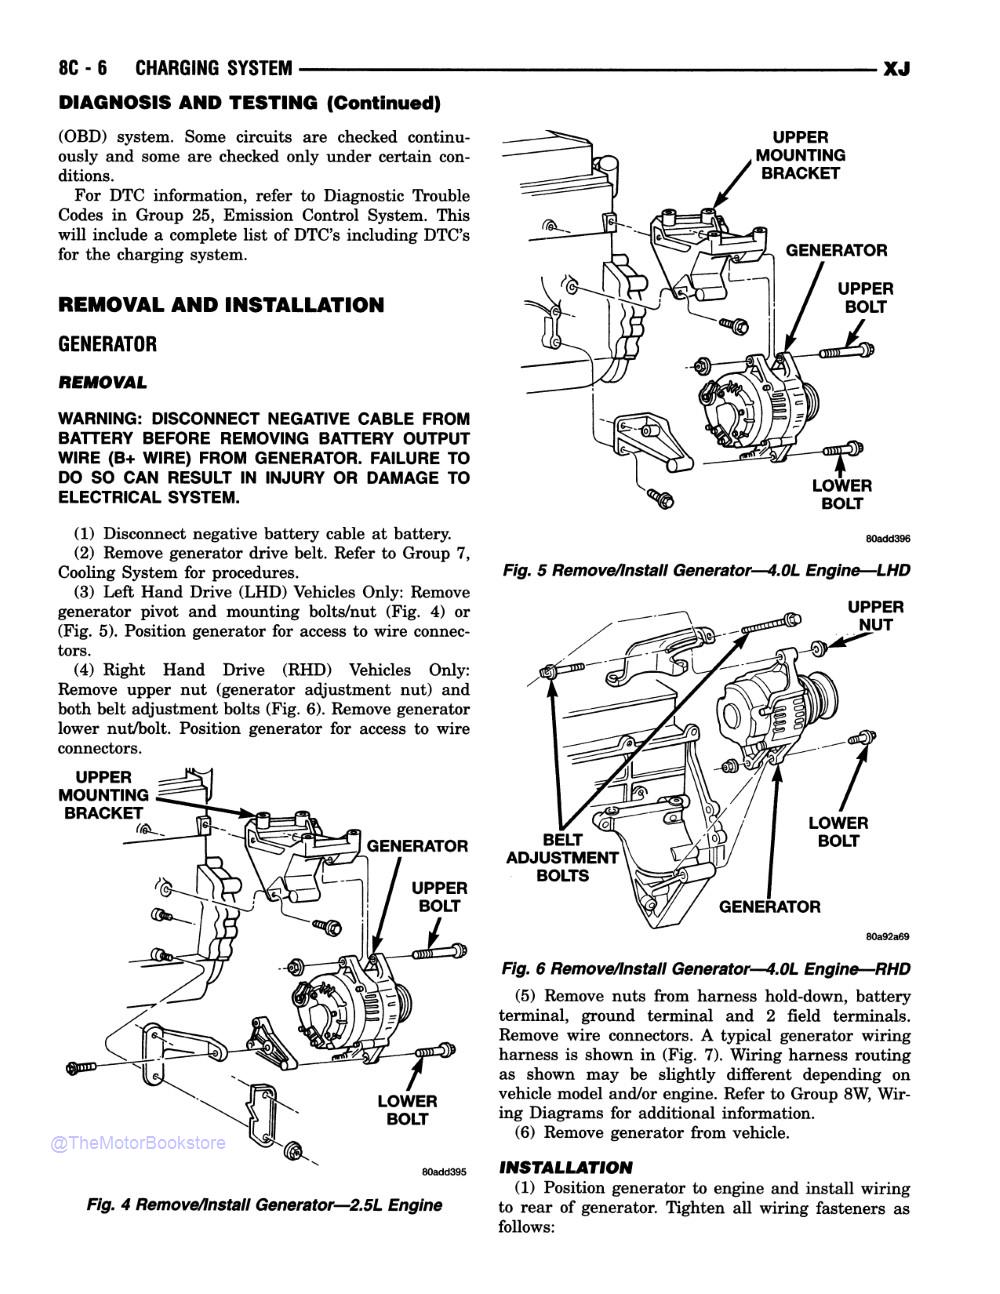 1998 Jeep Cherokee Shop Manual - Sample Page 1